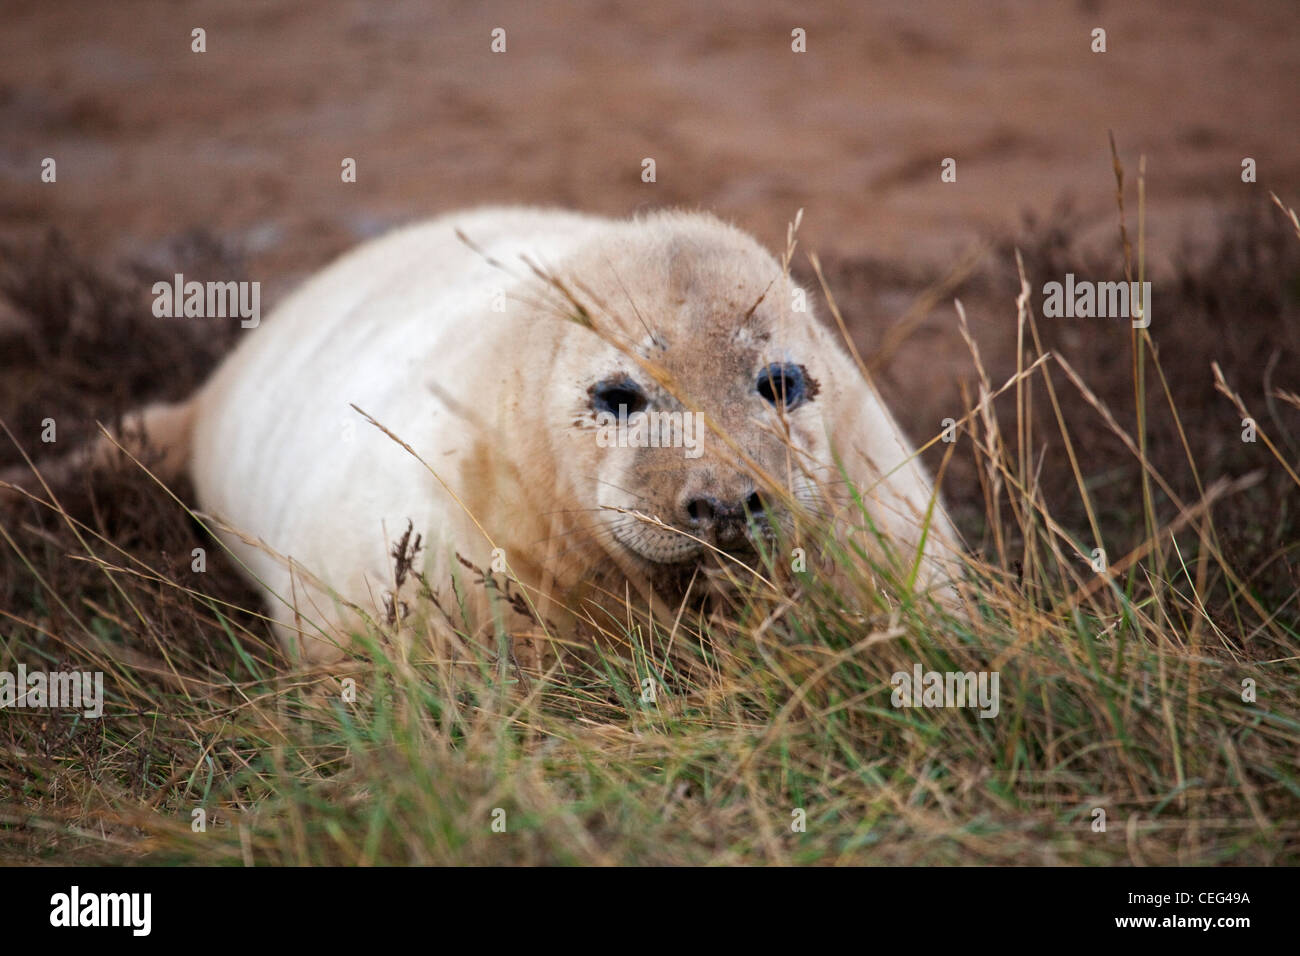 Donna Nook seal Stock Photo